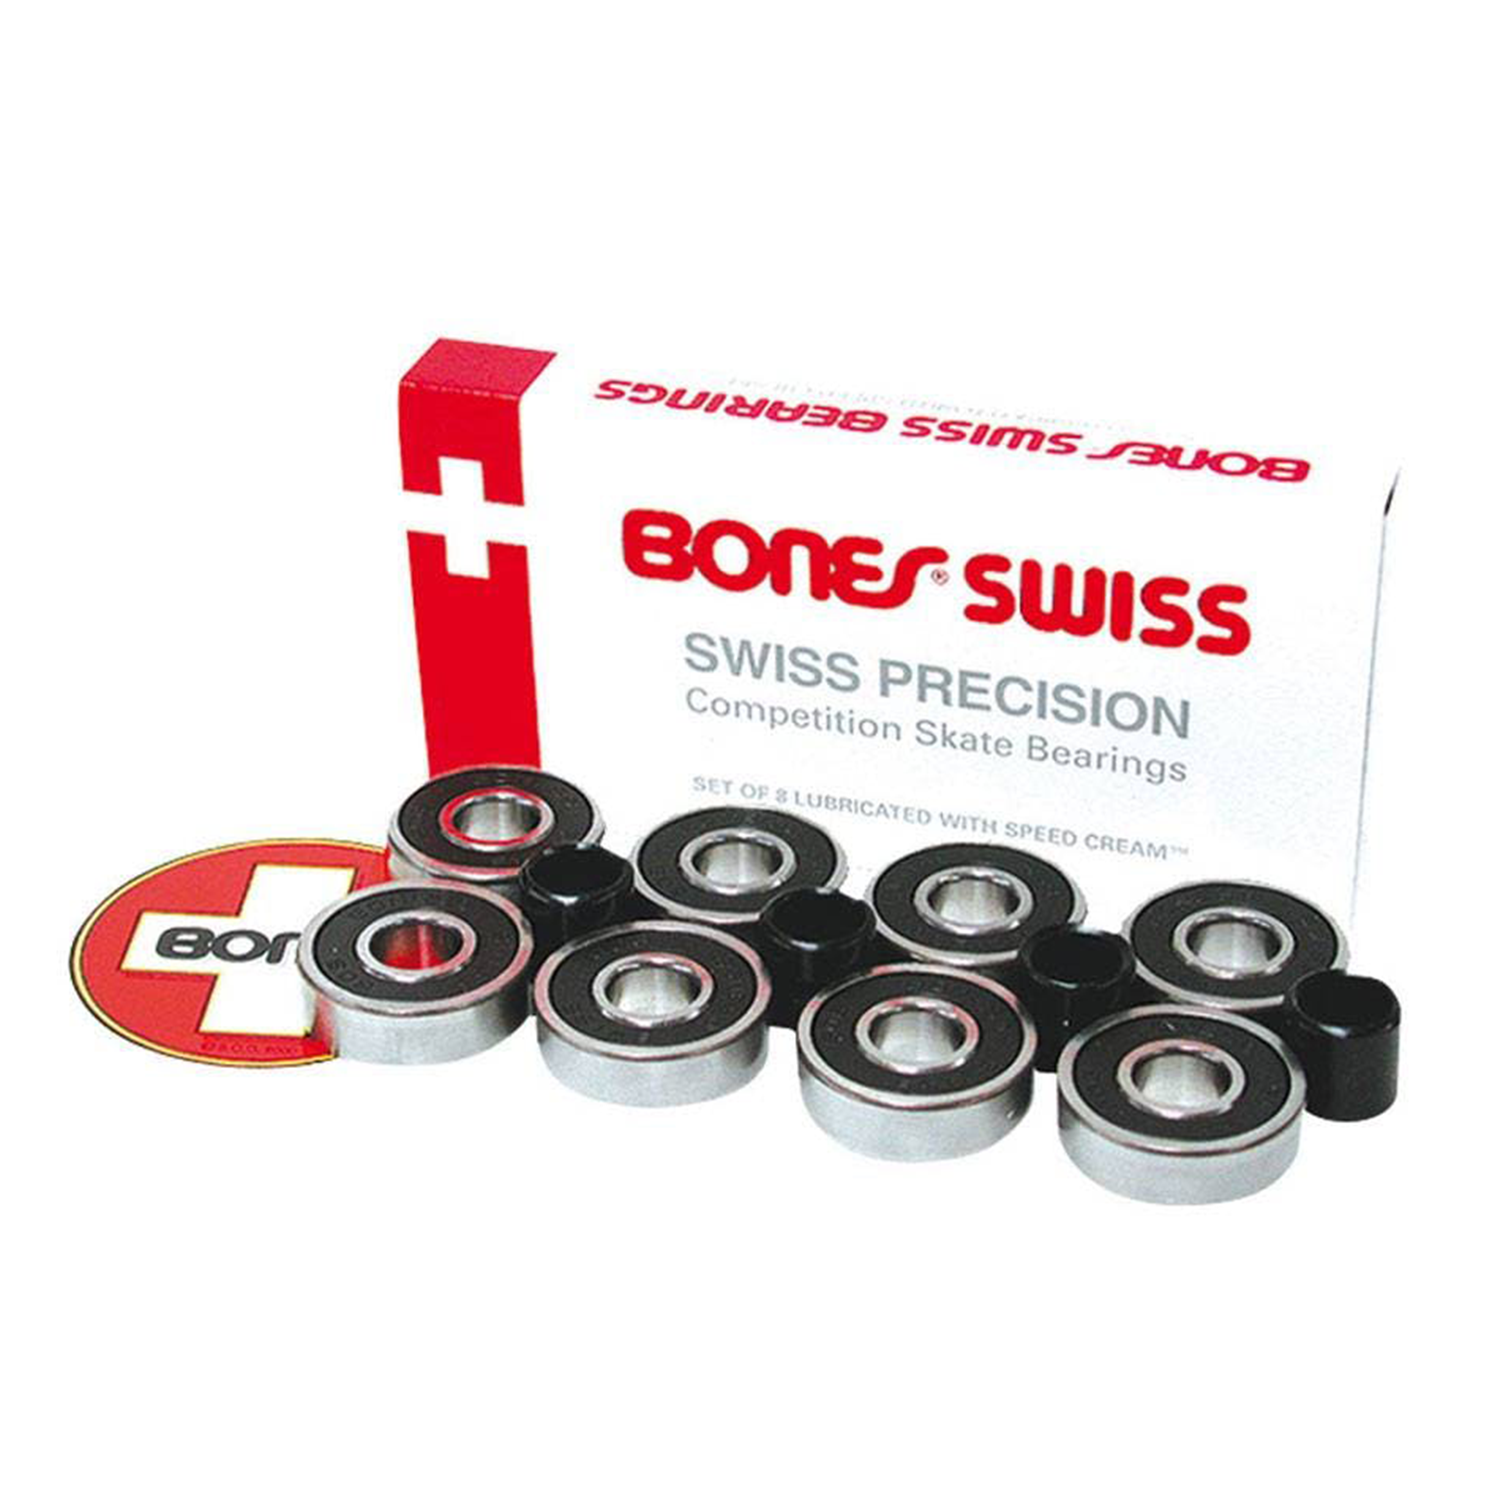 Rodajes Bones Swiss